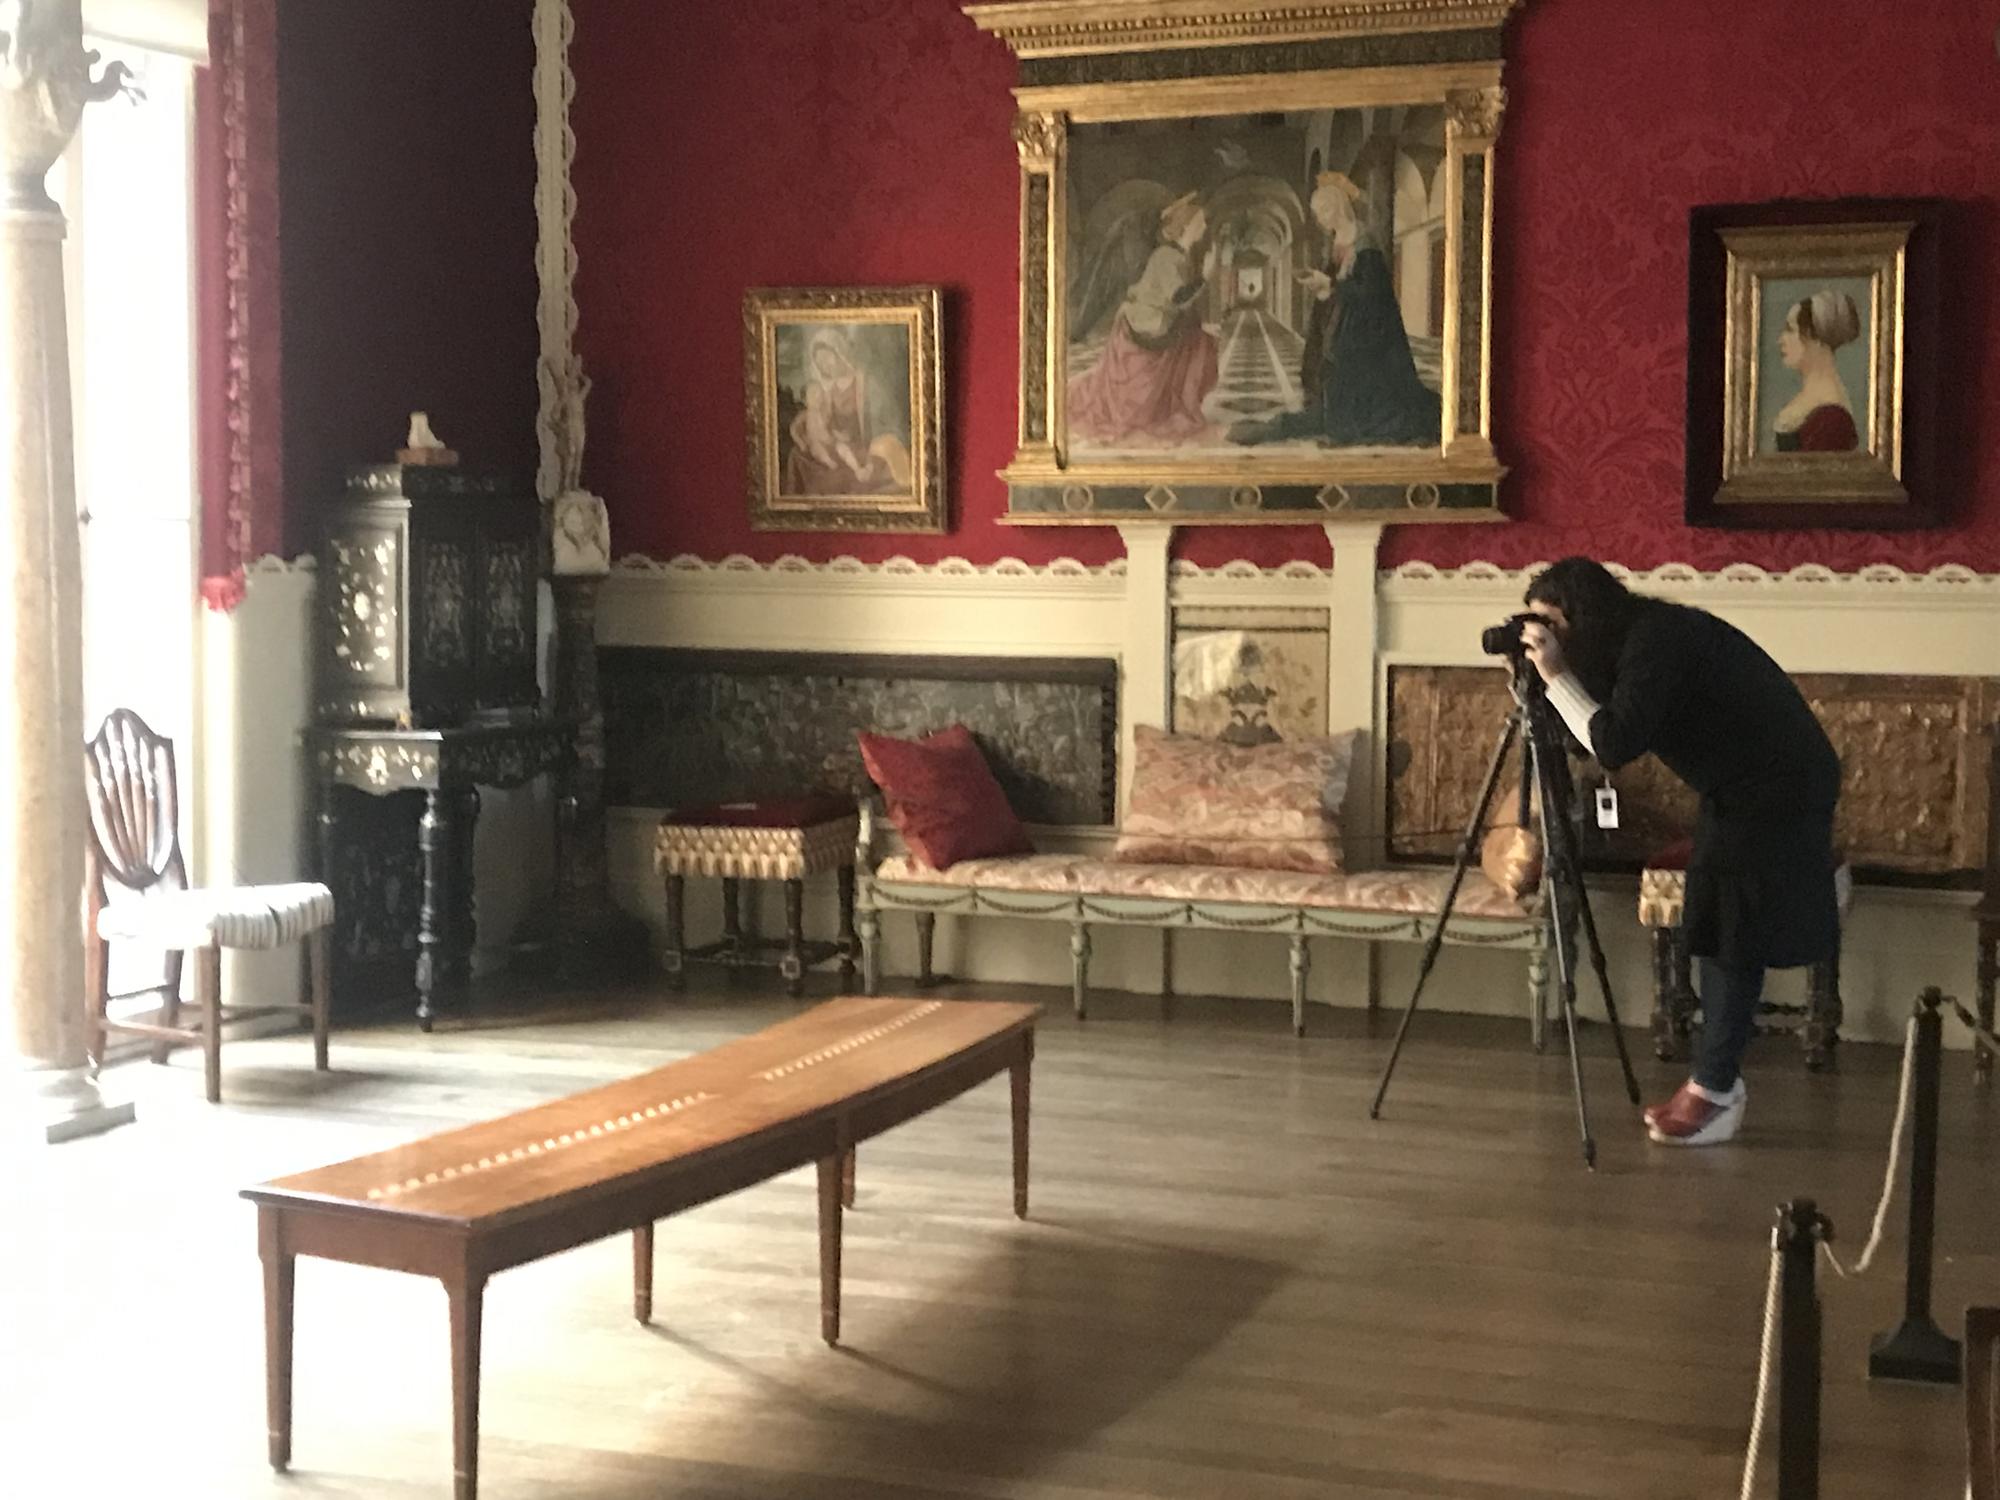 Nicole Cherubini photographing objects in the Raphael Room, 2019